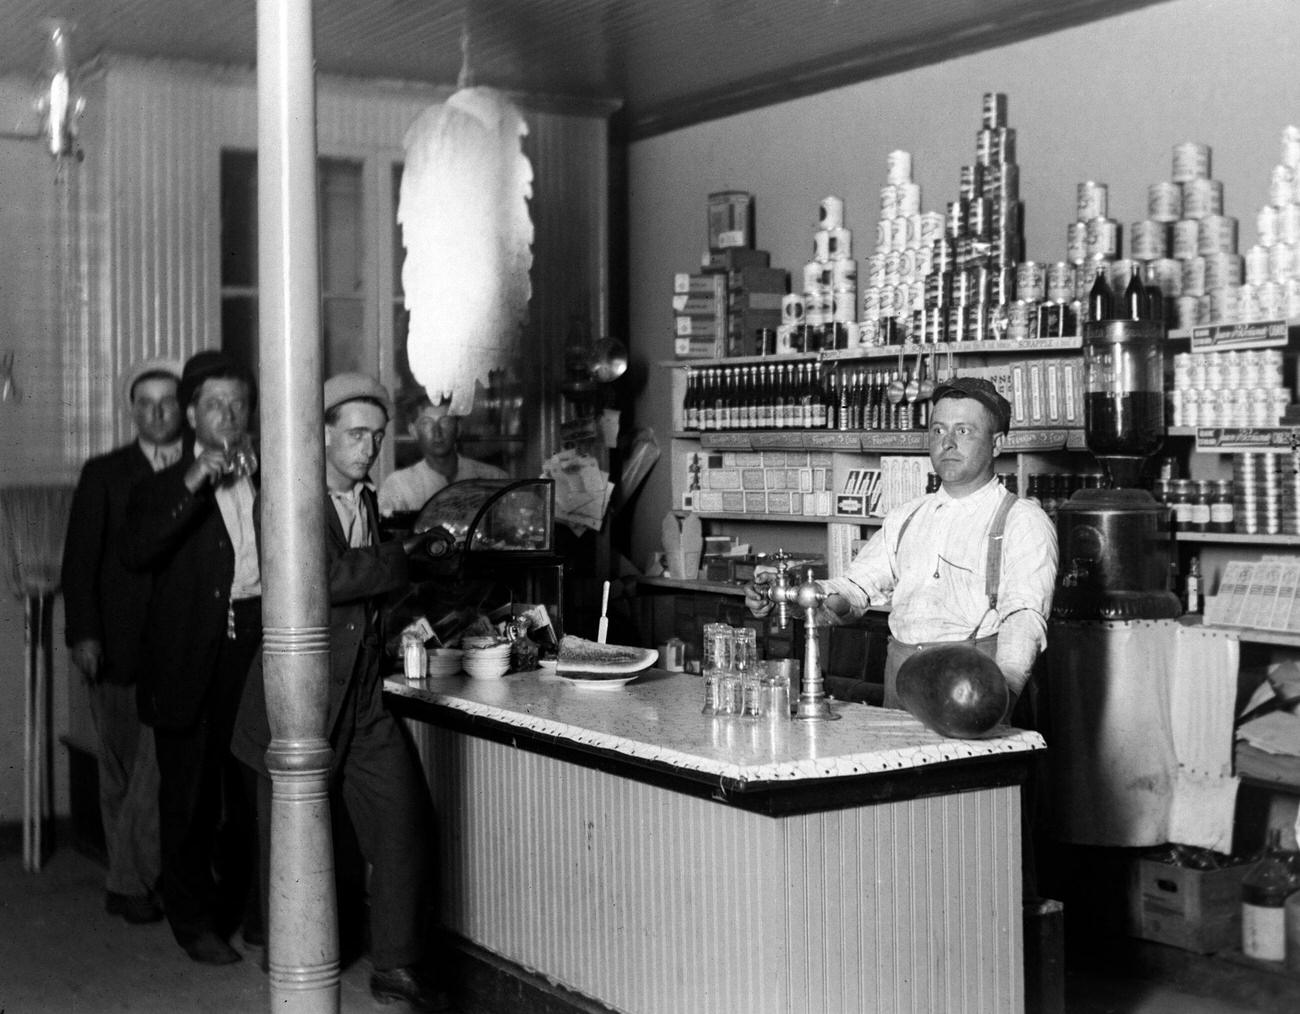 Customers in General Store, 1900